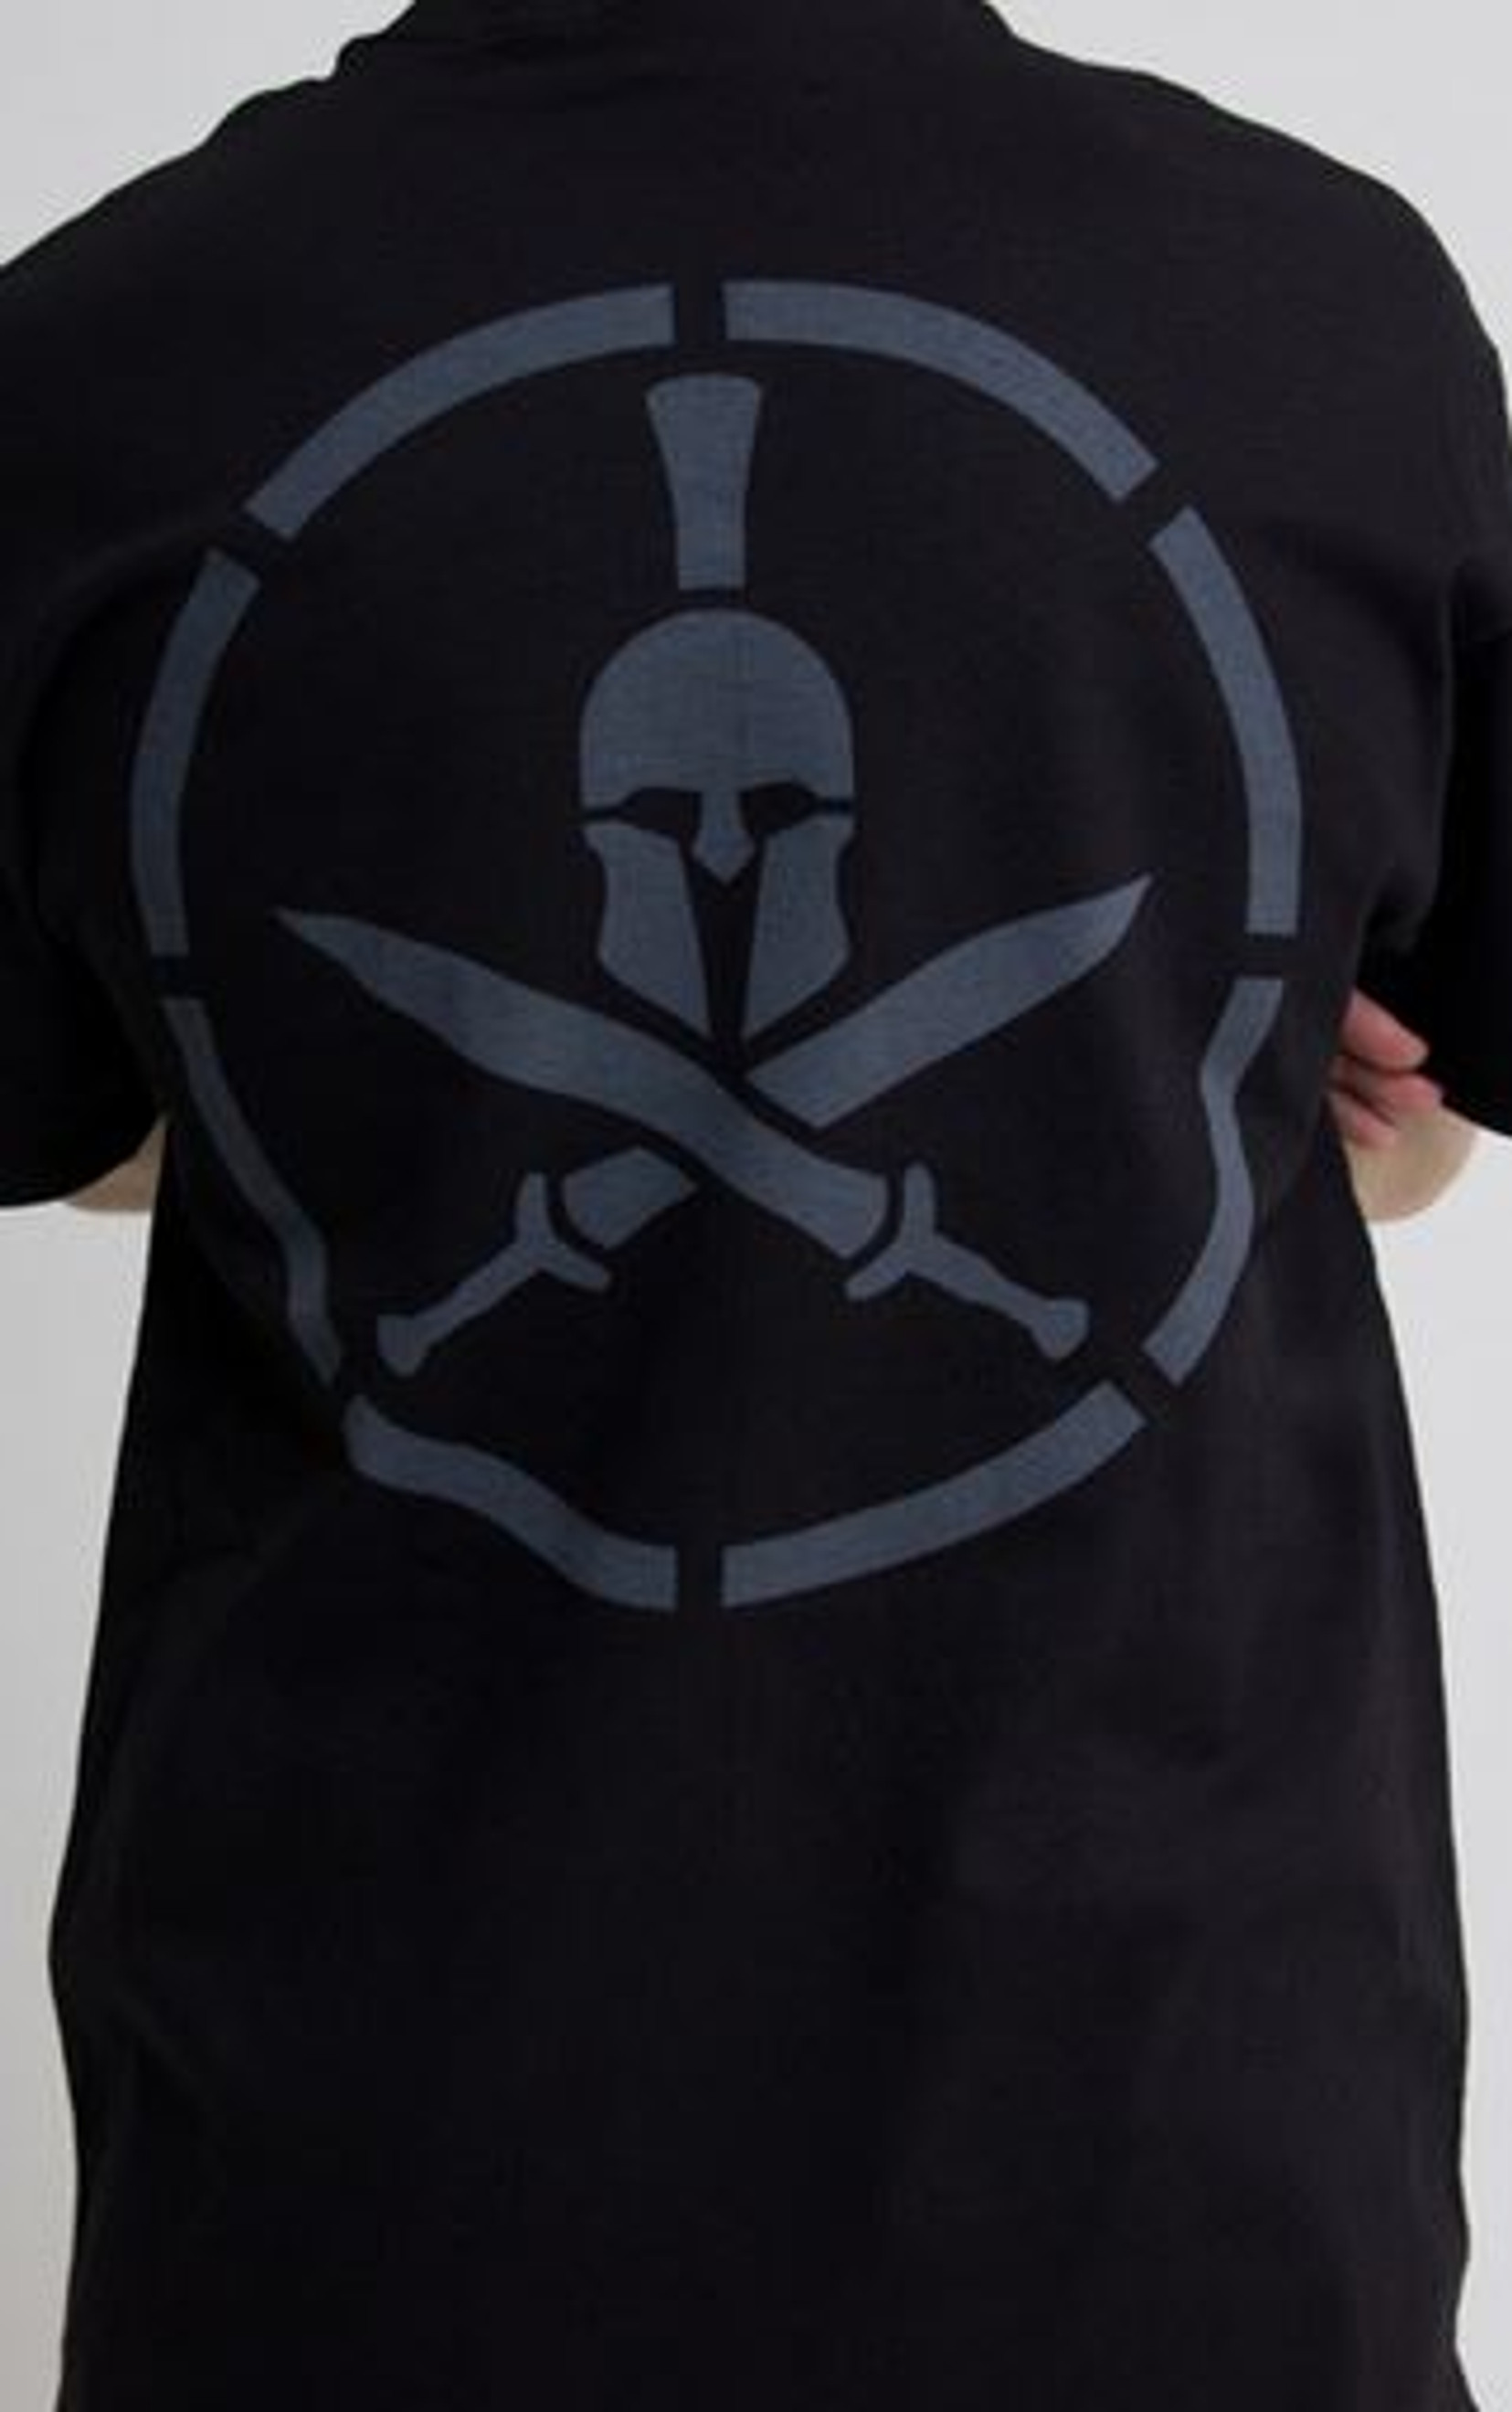 Mil-Spec Monkey Shirt - Spartan Black